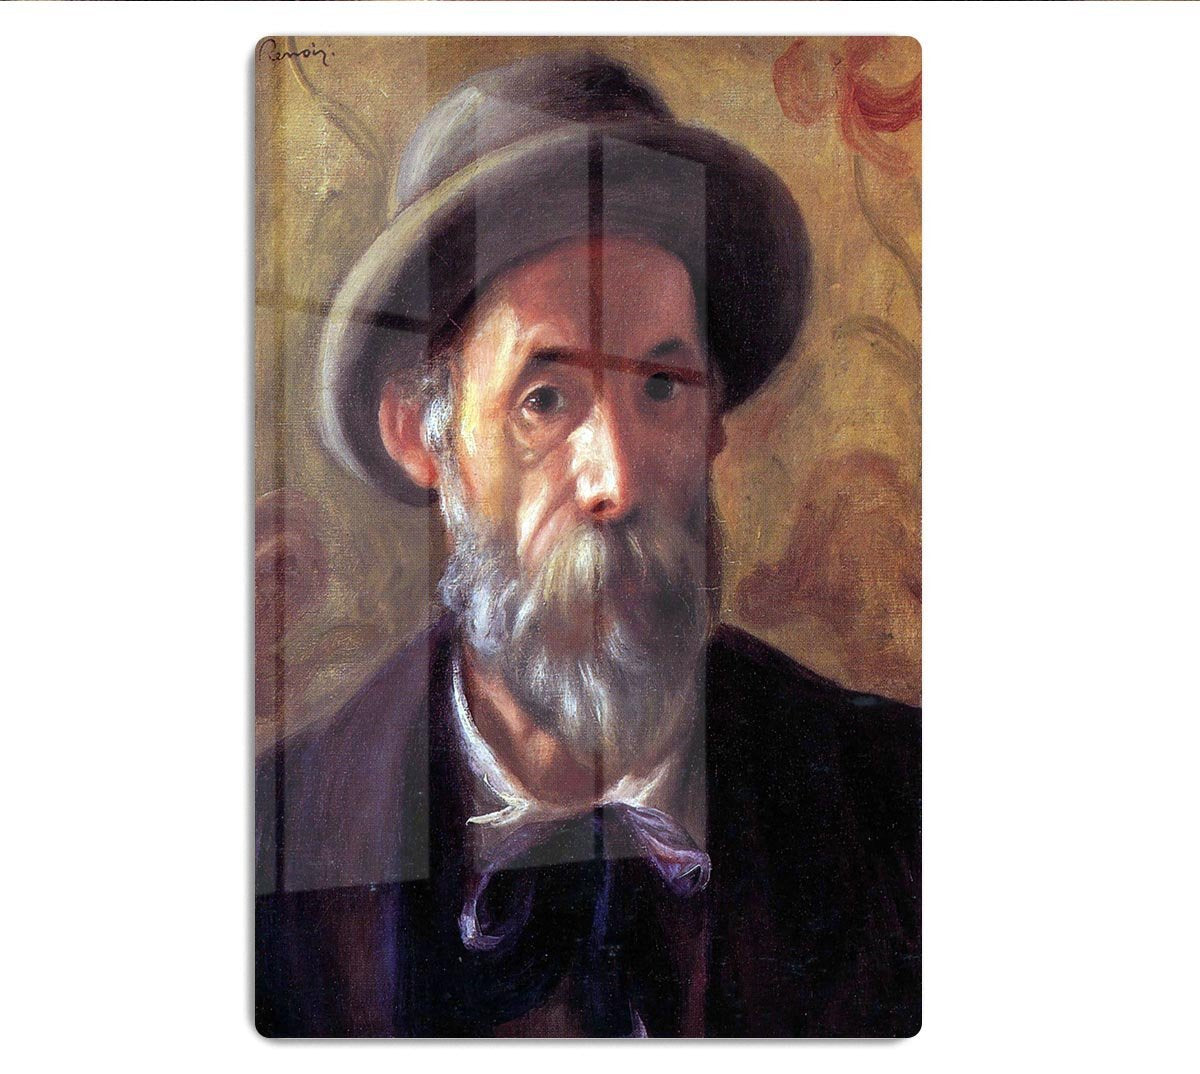 Self Portrait 1 by Renoir HD Metal Print